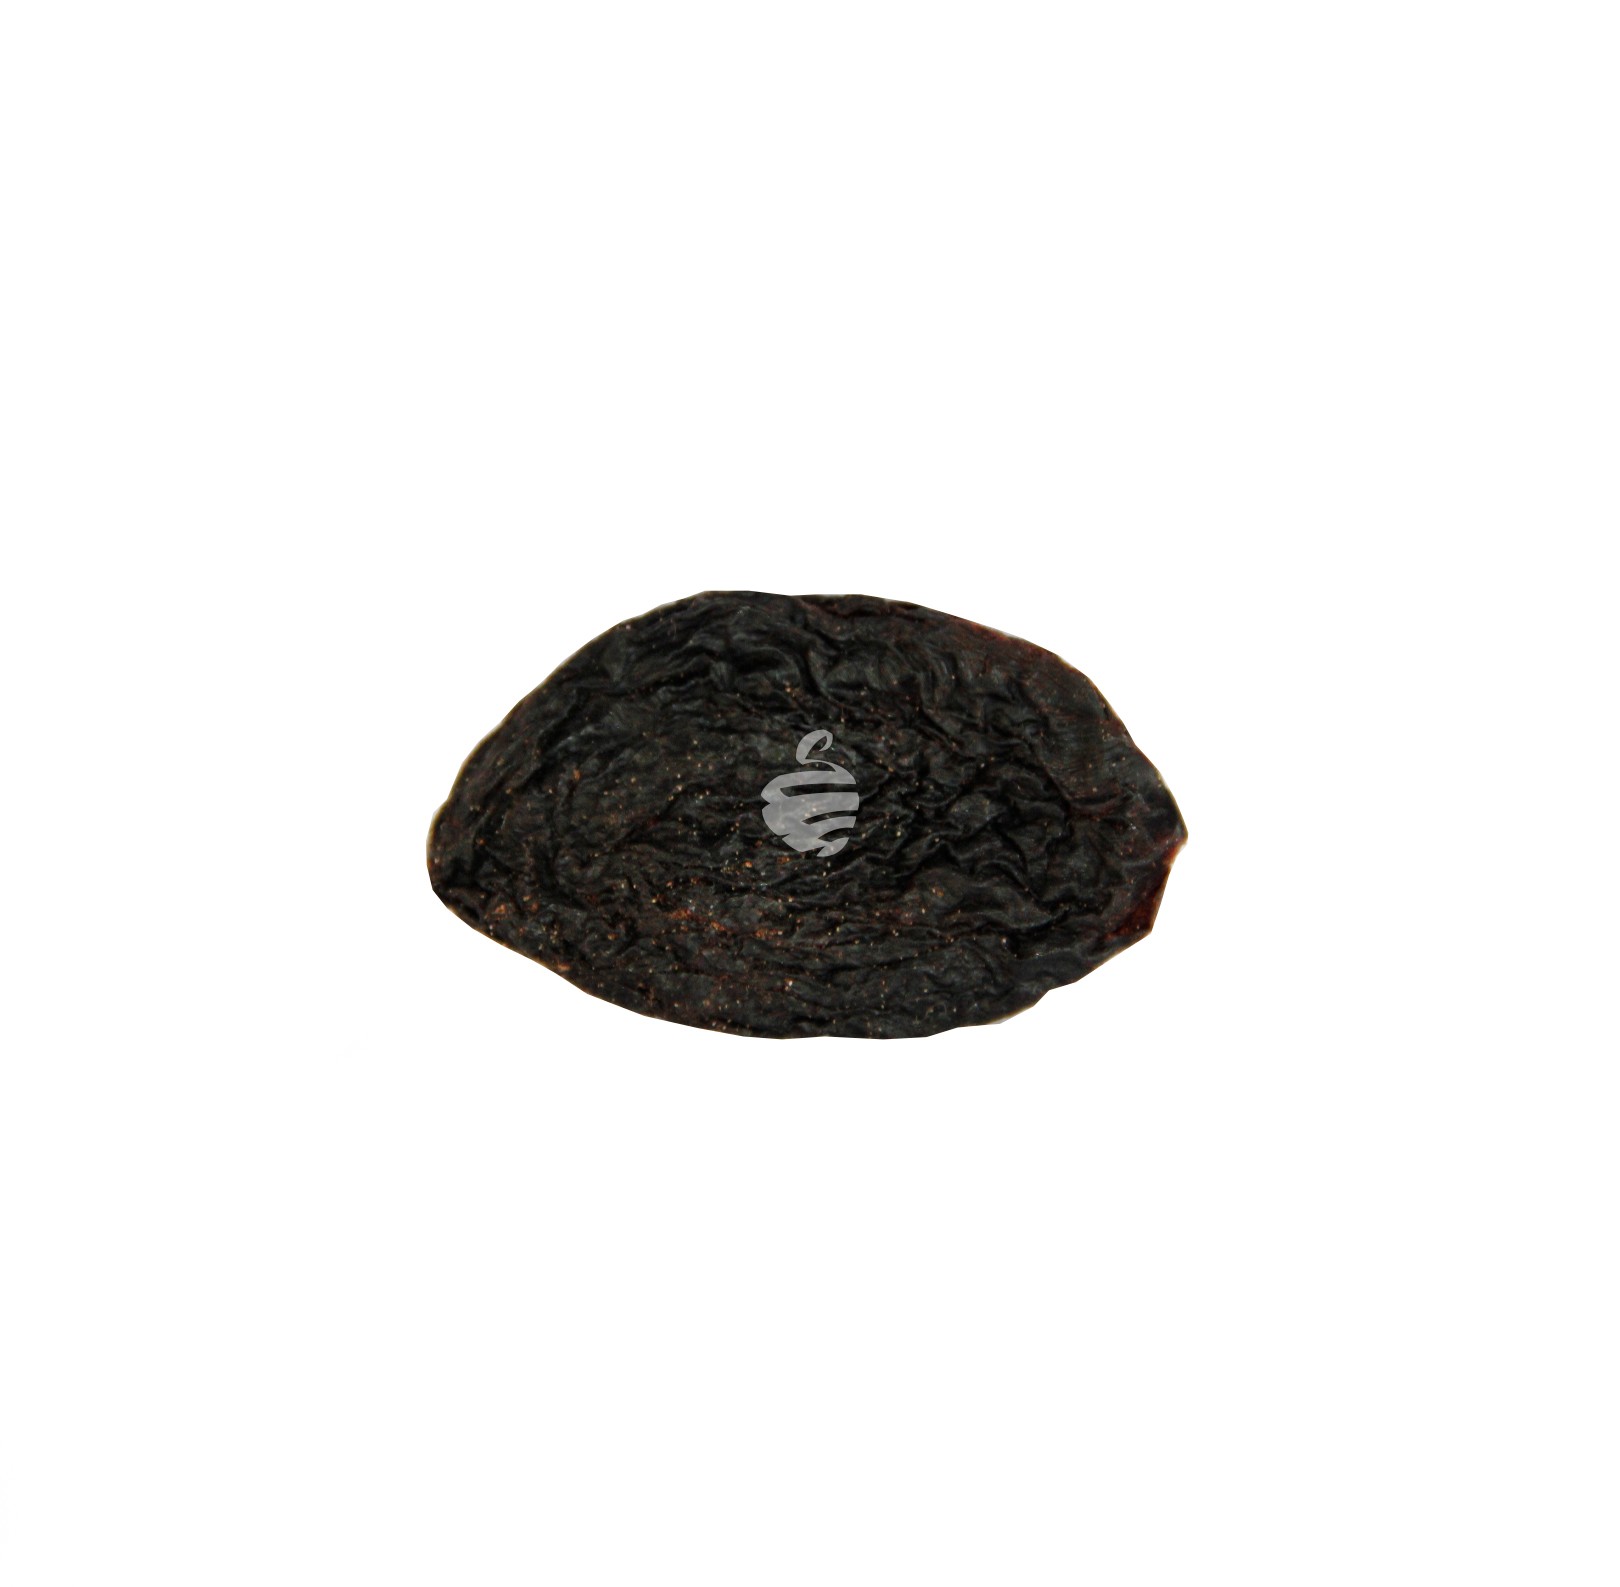 Black prune dried